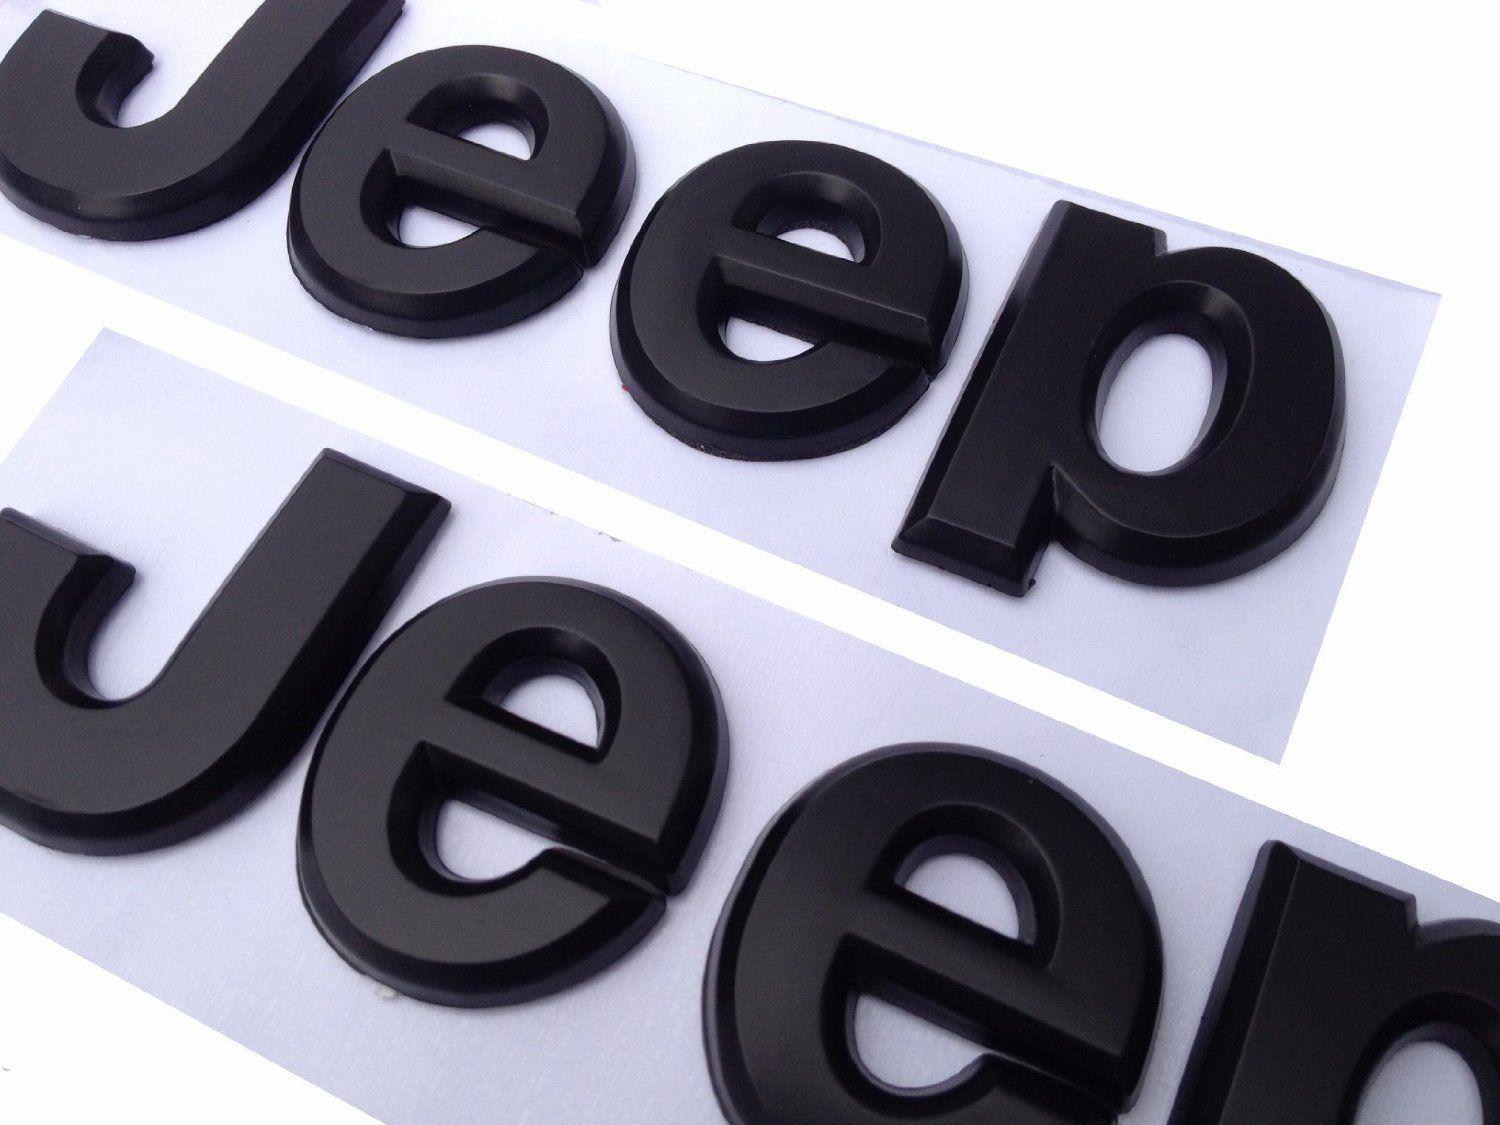 Jeep Black Logo - Amazon.com: 2PCS× Flat Matte Black JEEP Emblem Logo Stickers ...